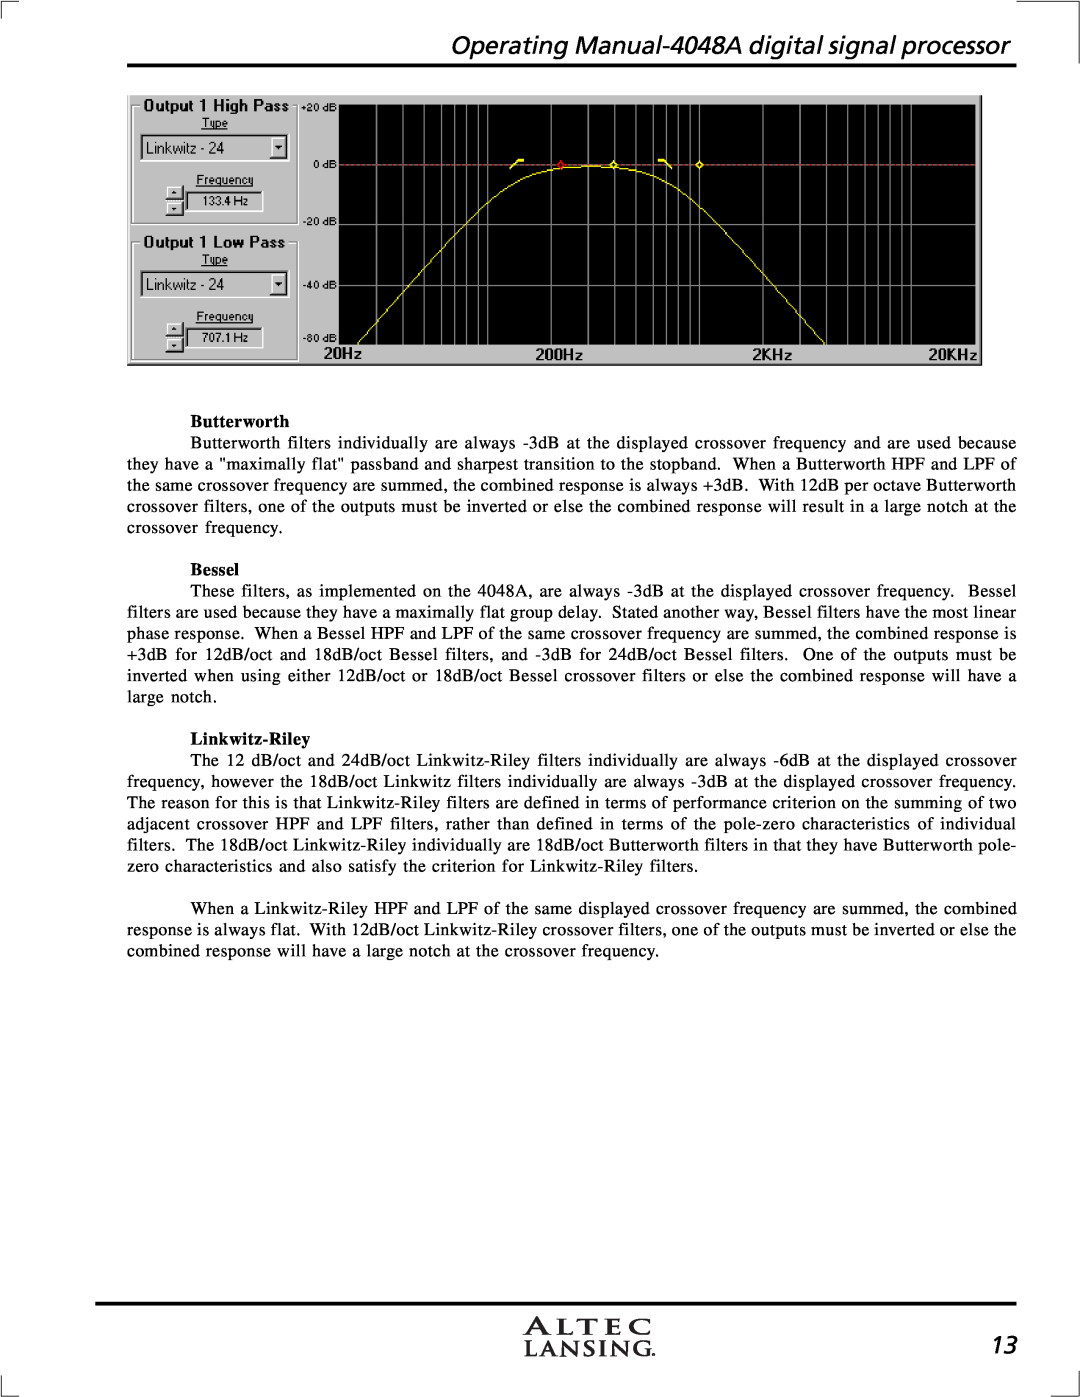 Altec Lansing 4948A manual Operating Manual-4048A digital signal processor, Butterworth, Bessel, Linkwitz-Riley 